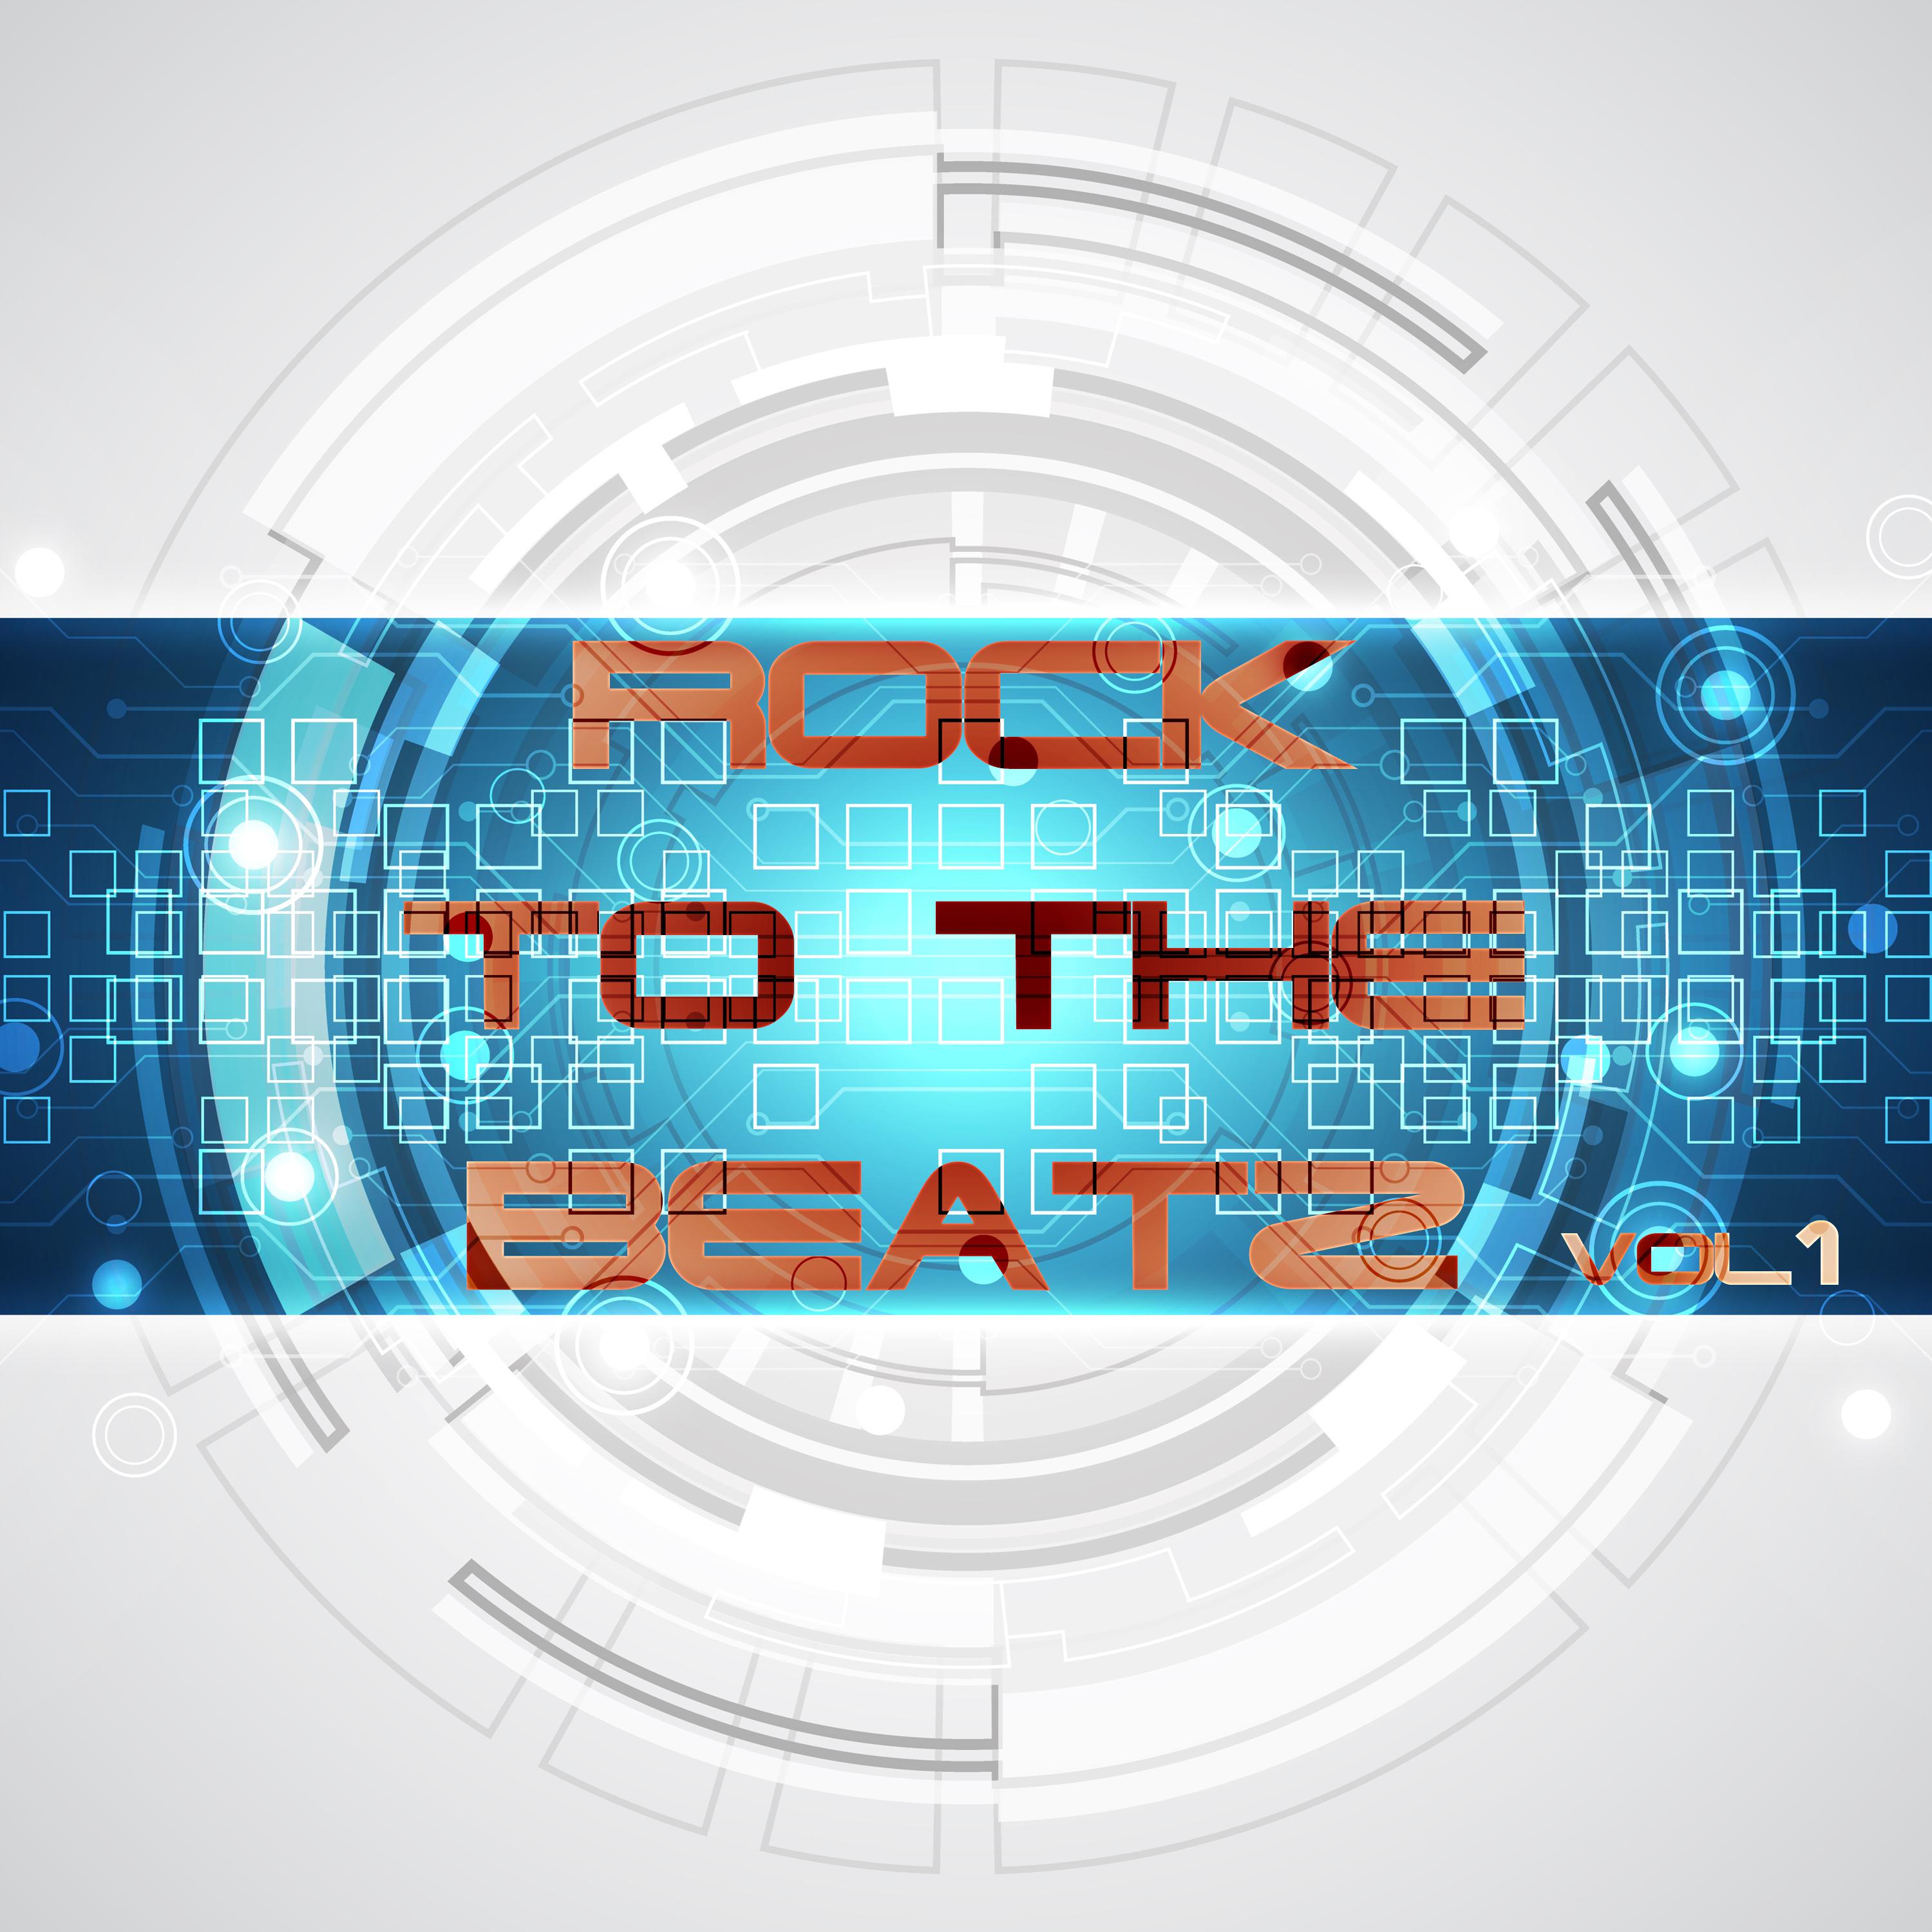 Rock to the Beatz, Vol. 1